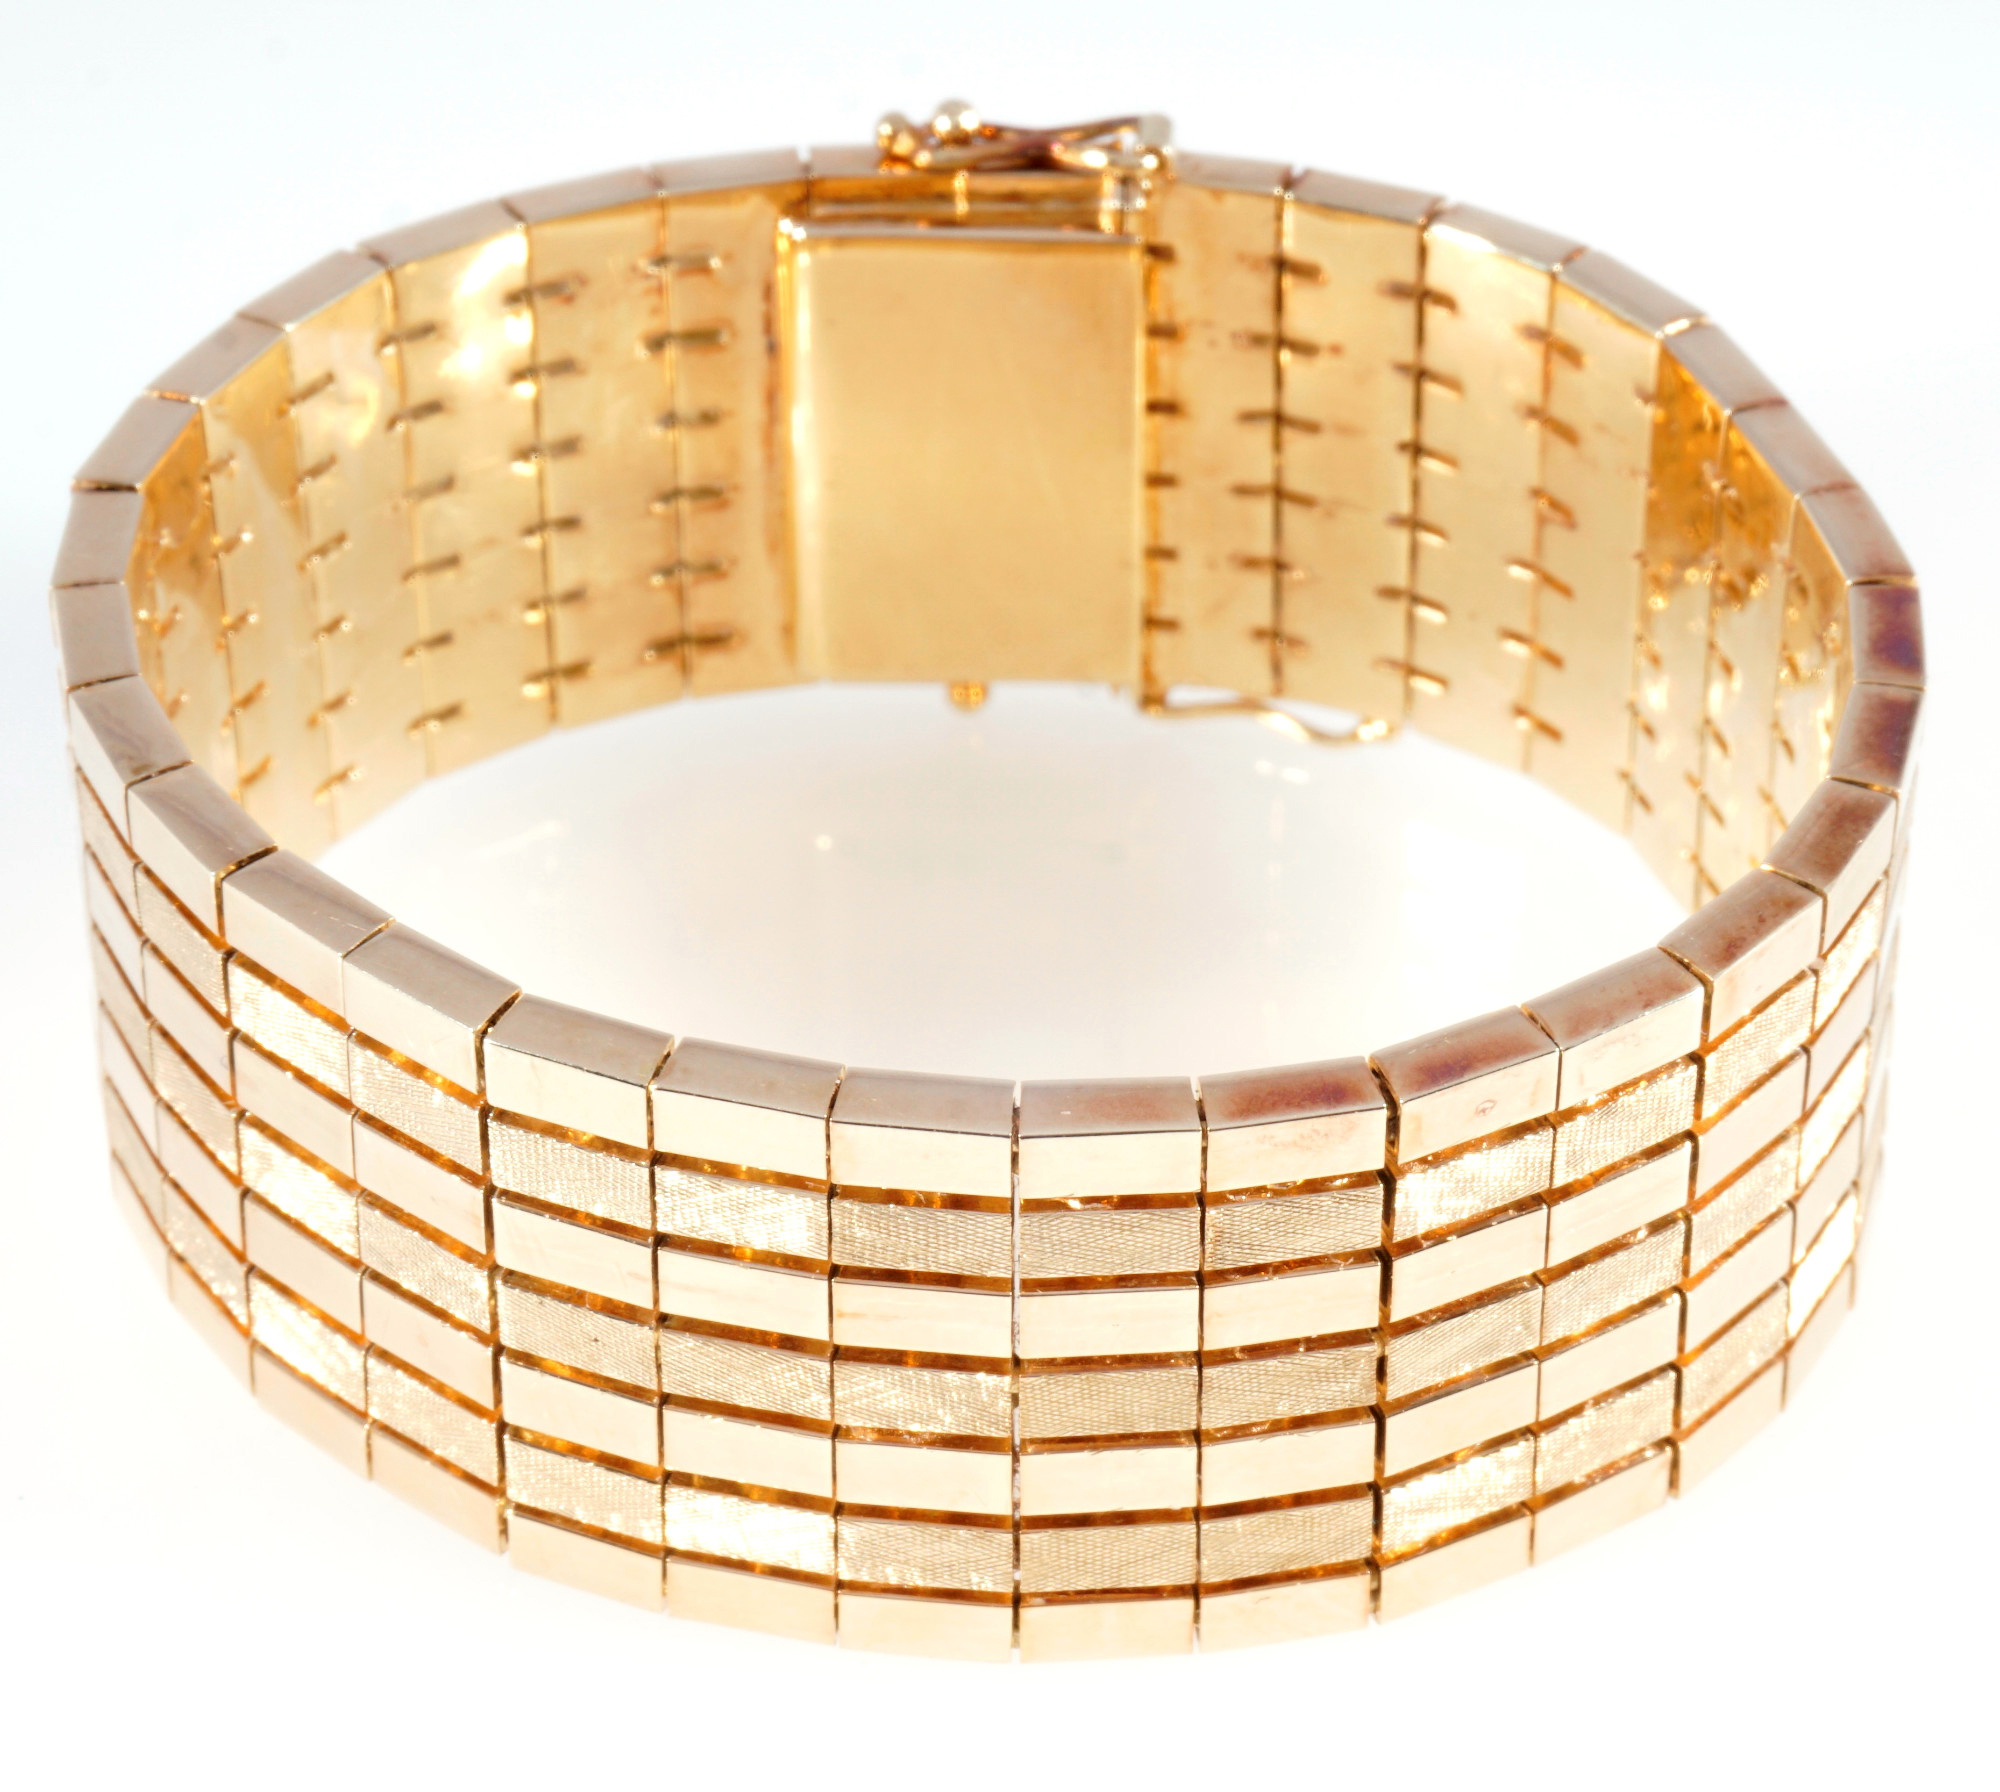 585 gold solid and wide bracelet 71.8 grams, 14K Gold massives und Breites Armband, - Image 3 of 5